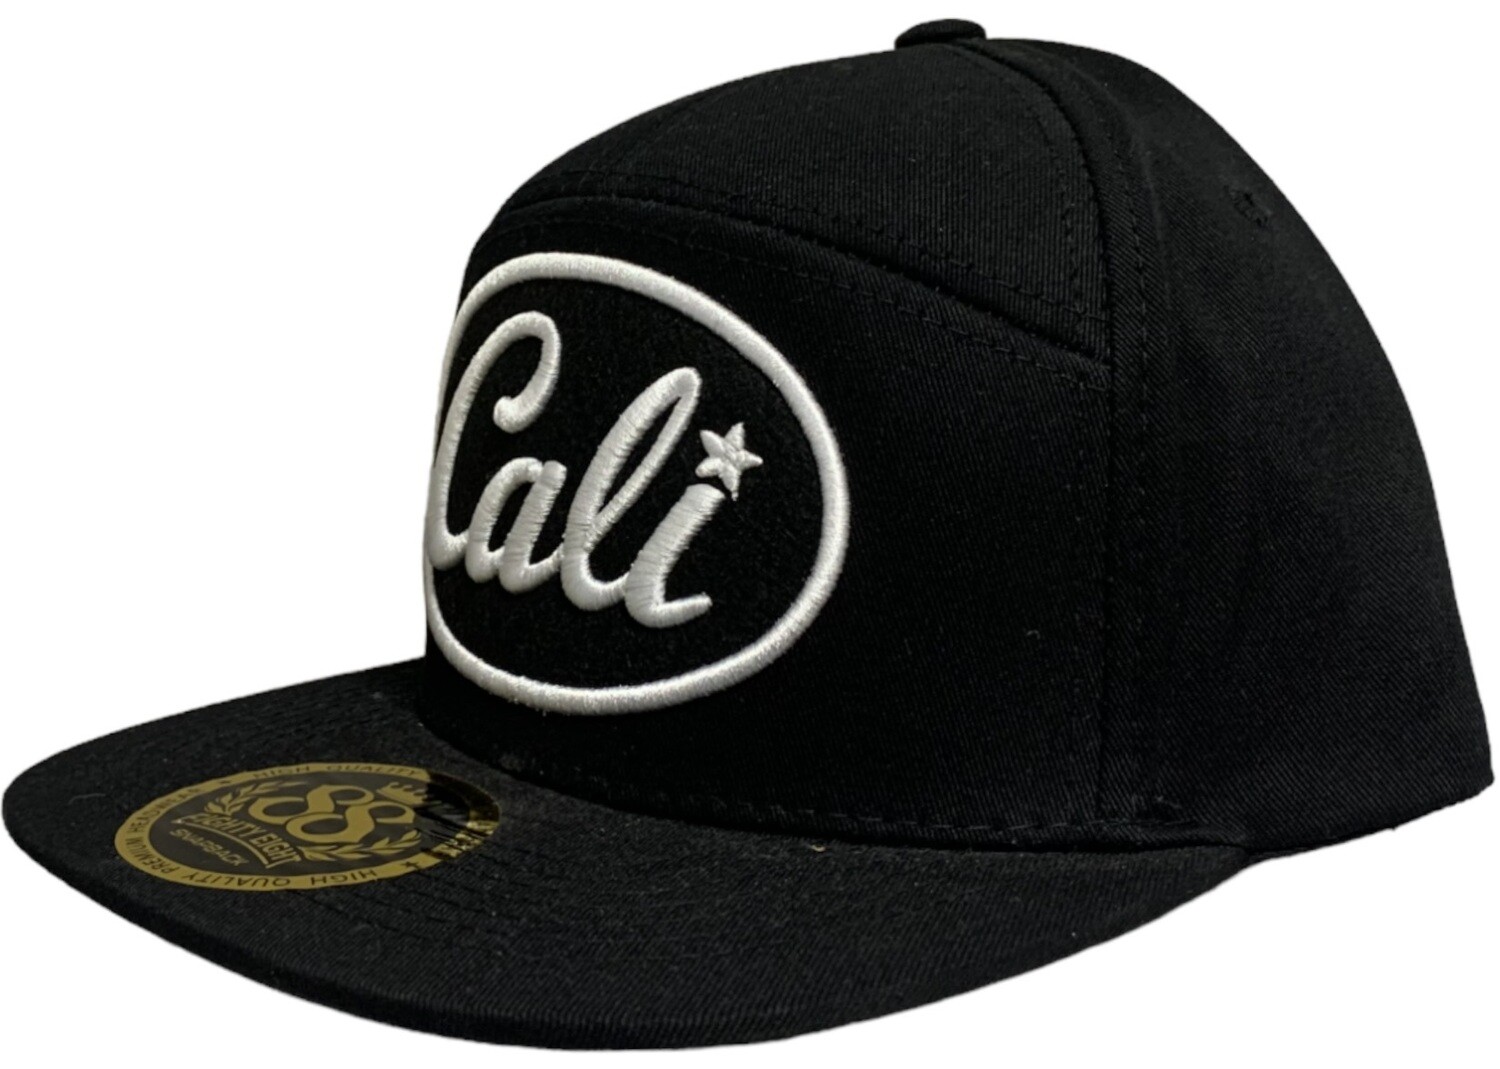 Cali Cursive Snapback Hat